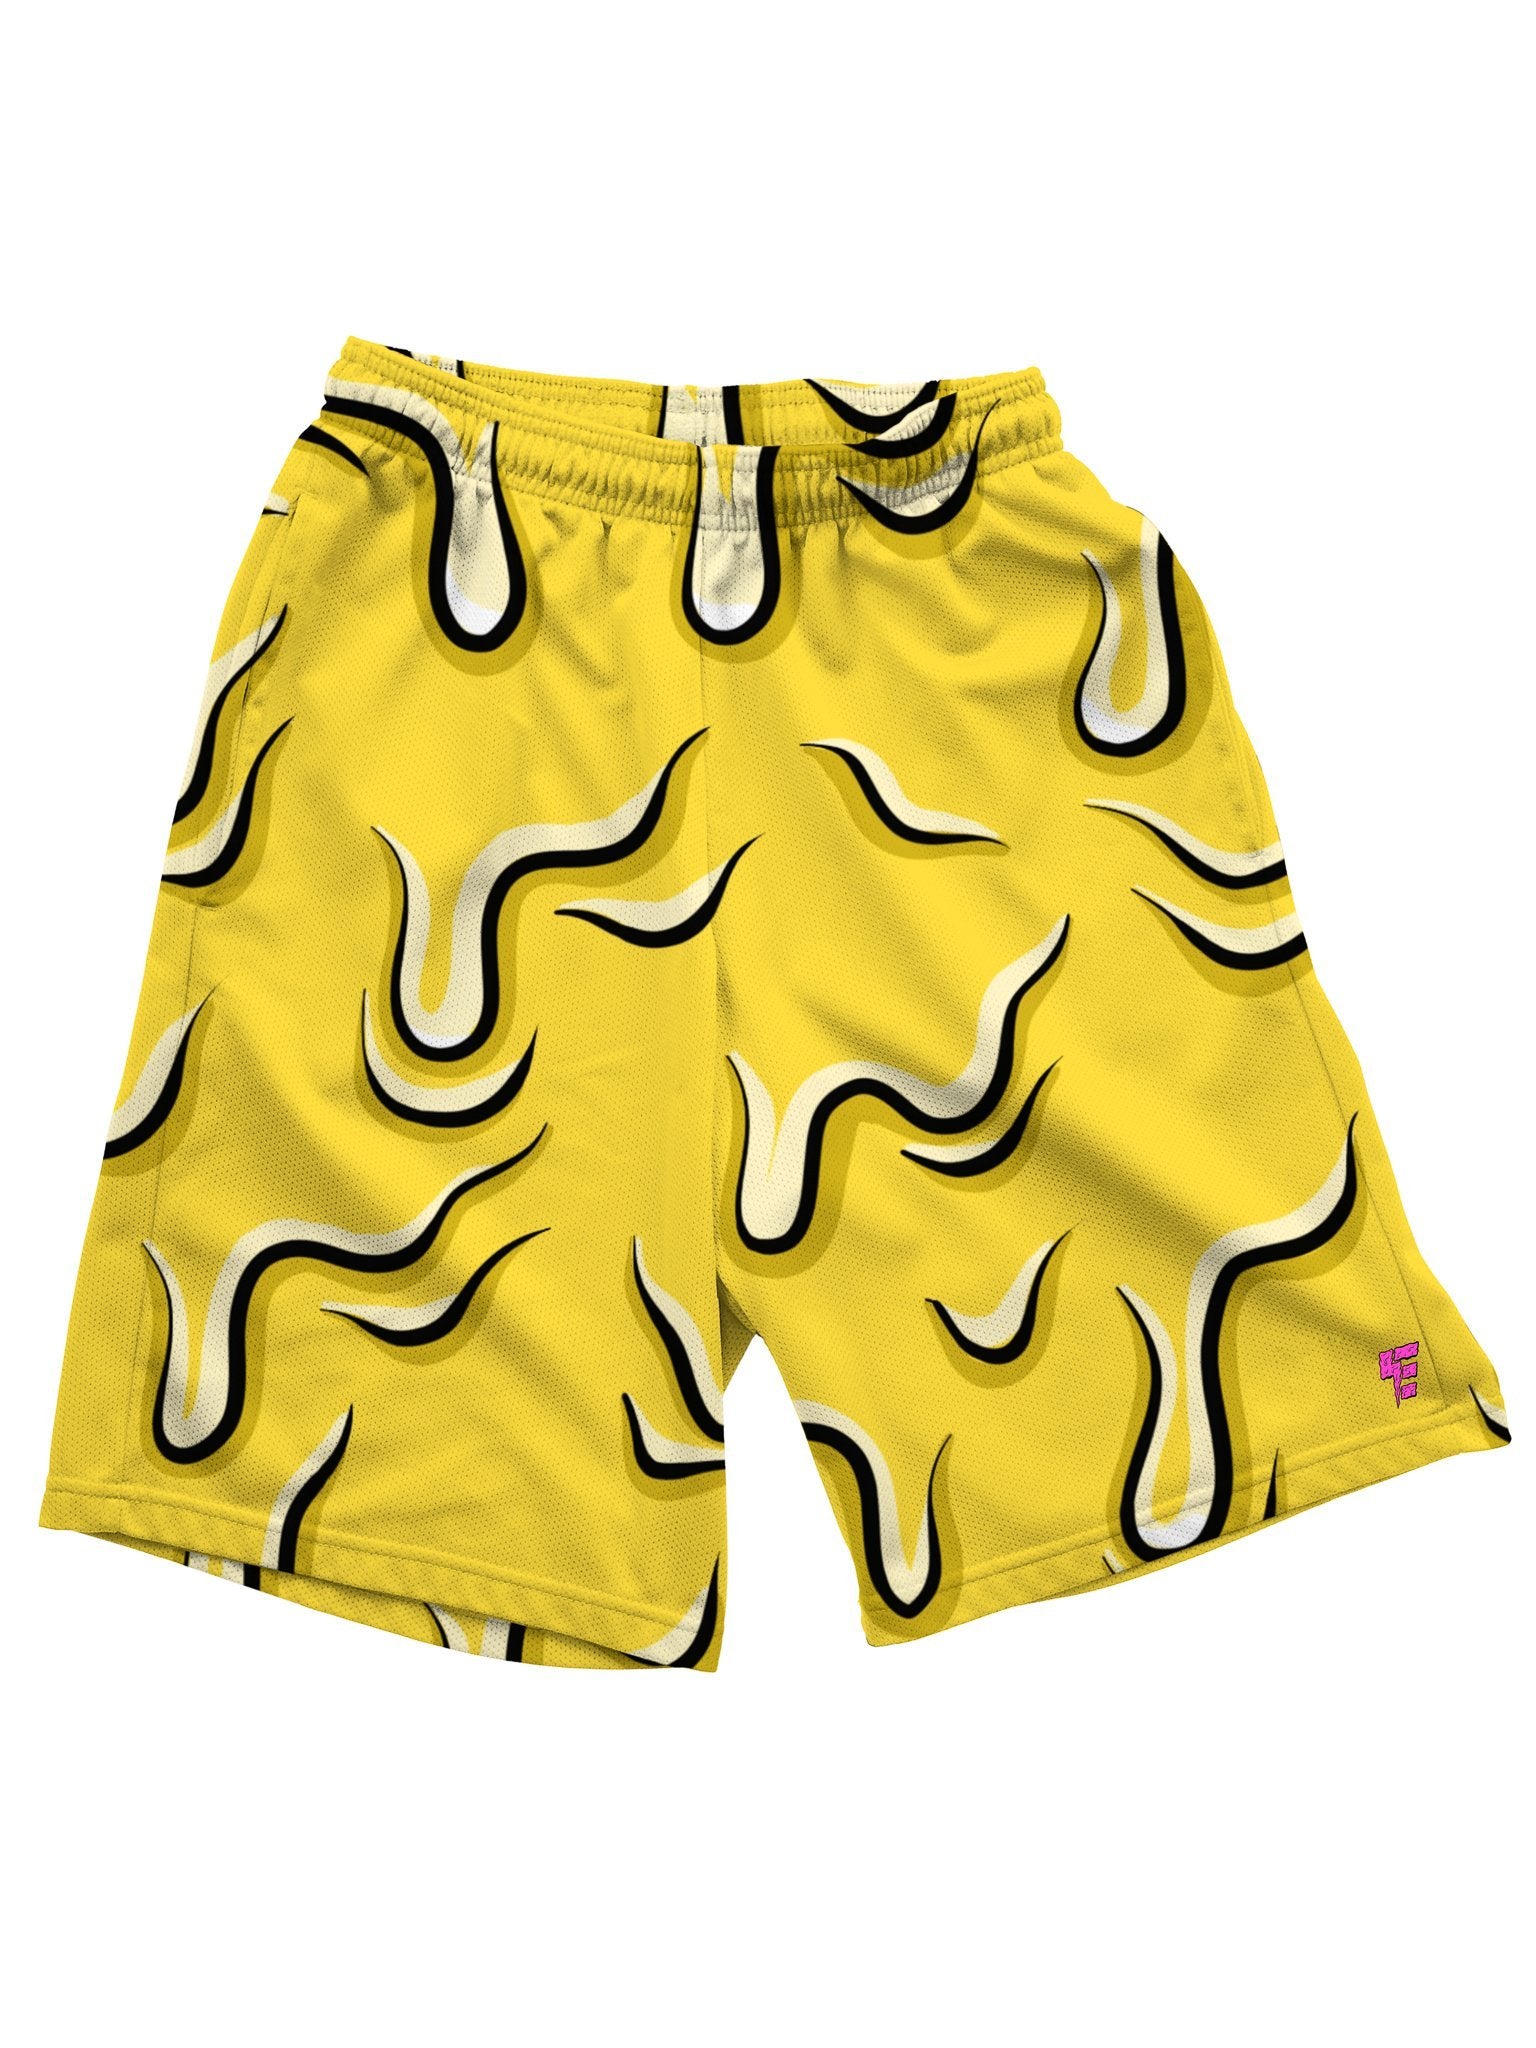 Neon Drippy (Yellow) Shorts - Electro Threads